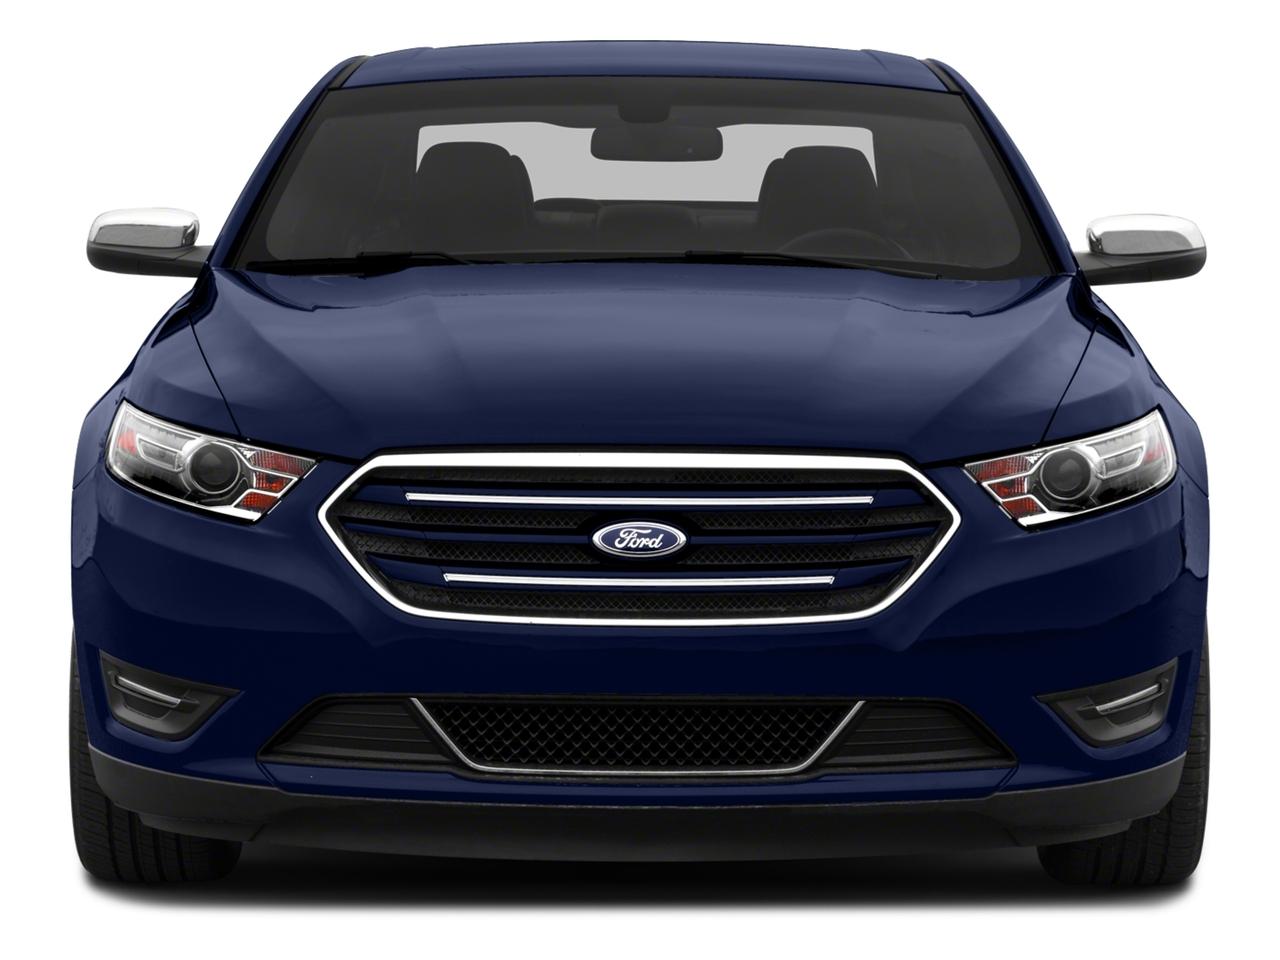 Ford Taurus 2014. Форд Таурус 2014. Ford Taurus 2015. Ford Taurus 2014 с решеткой спереди.